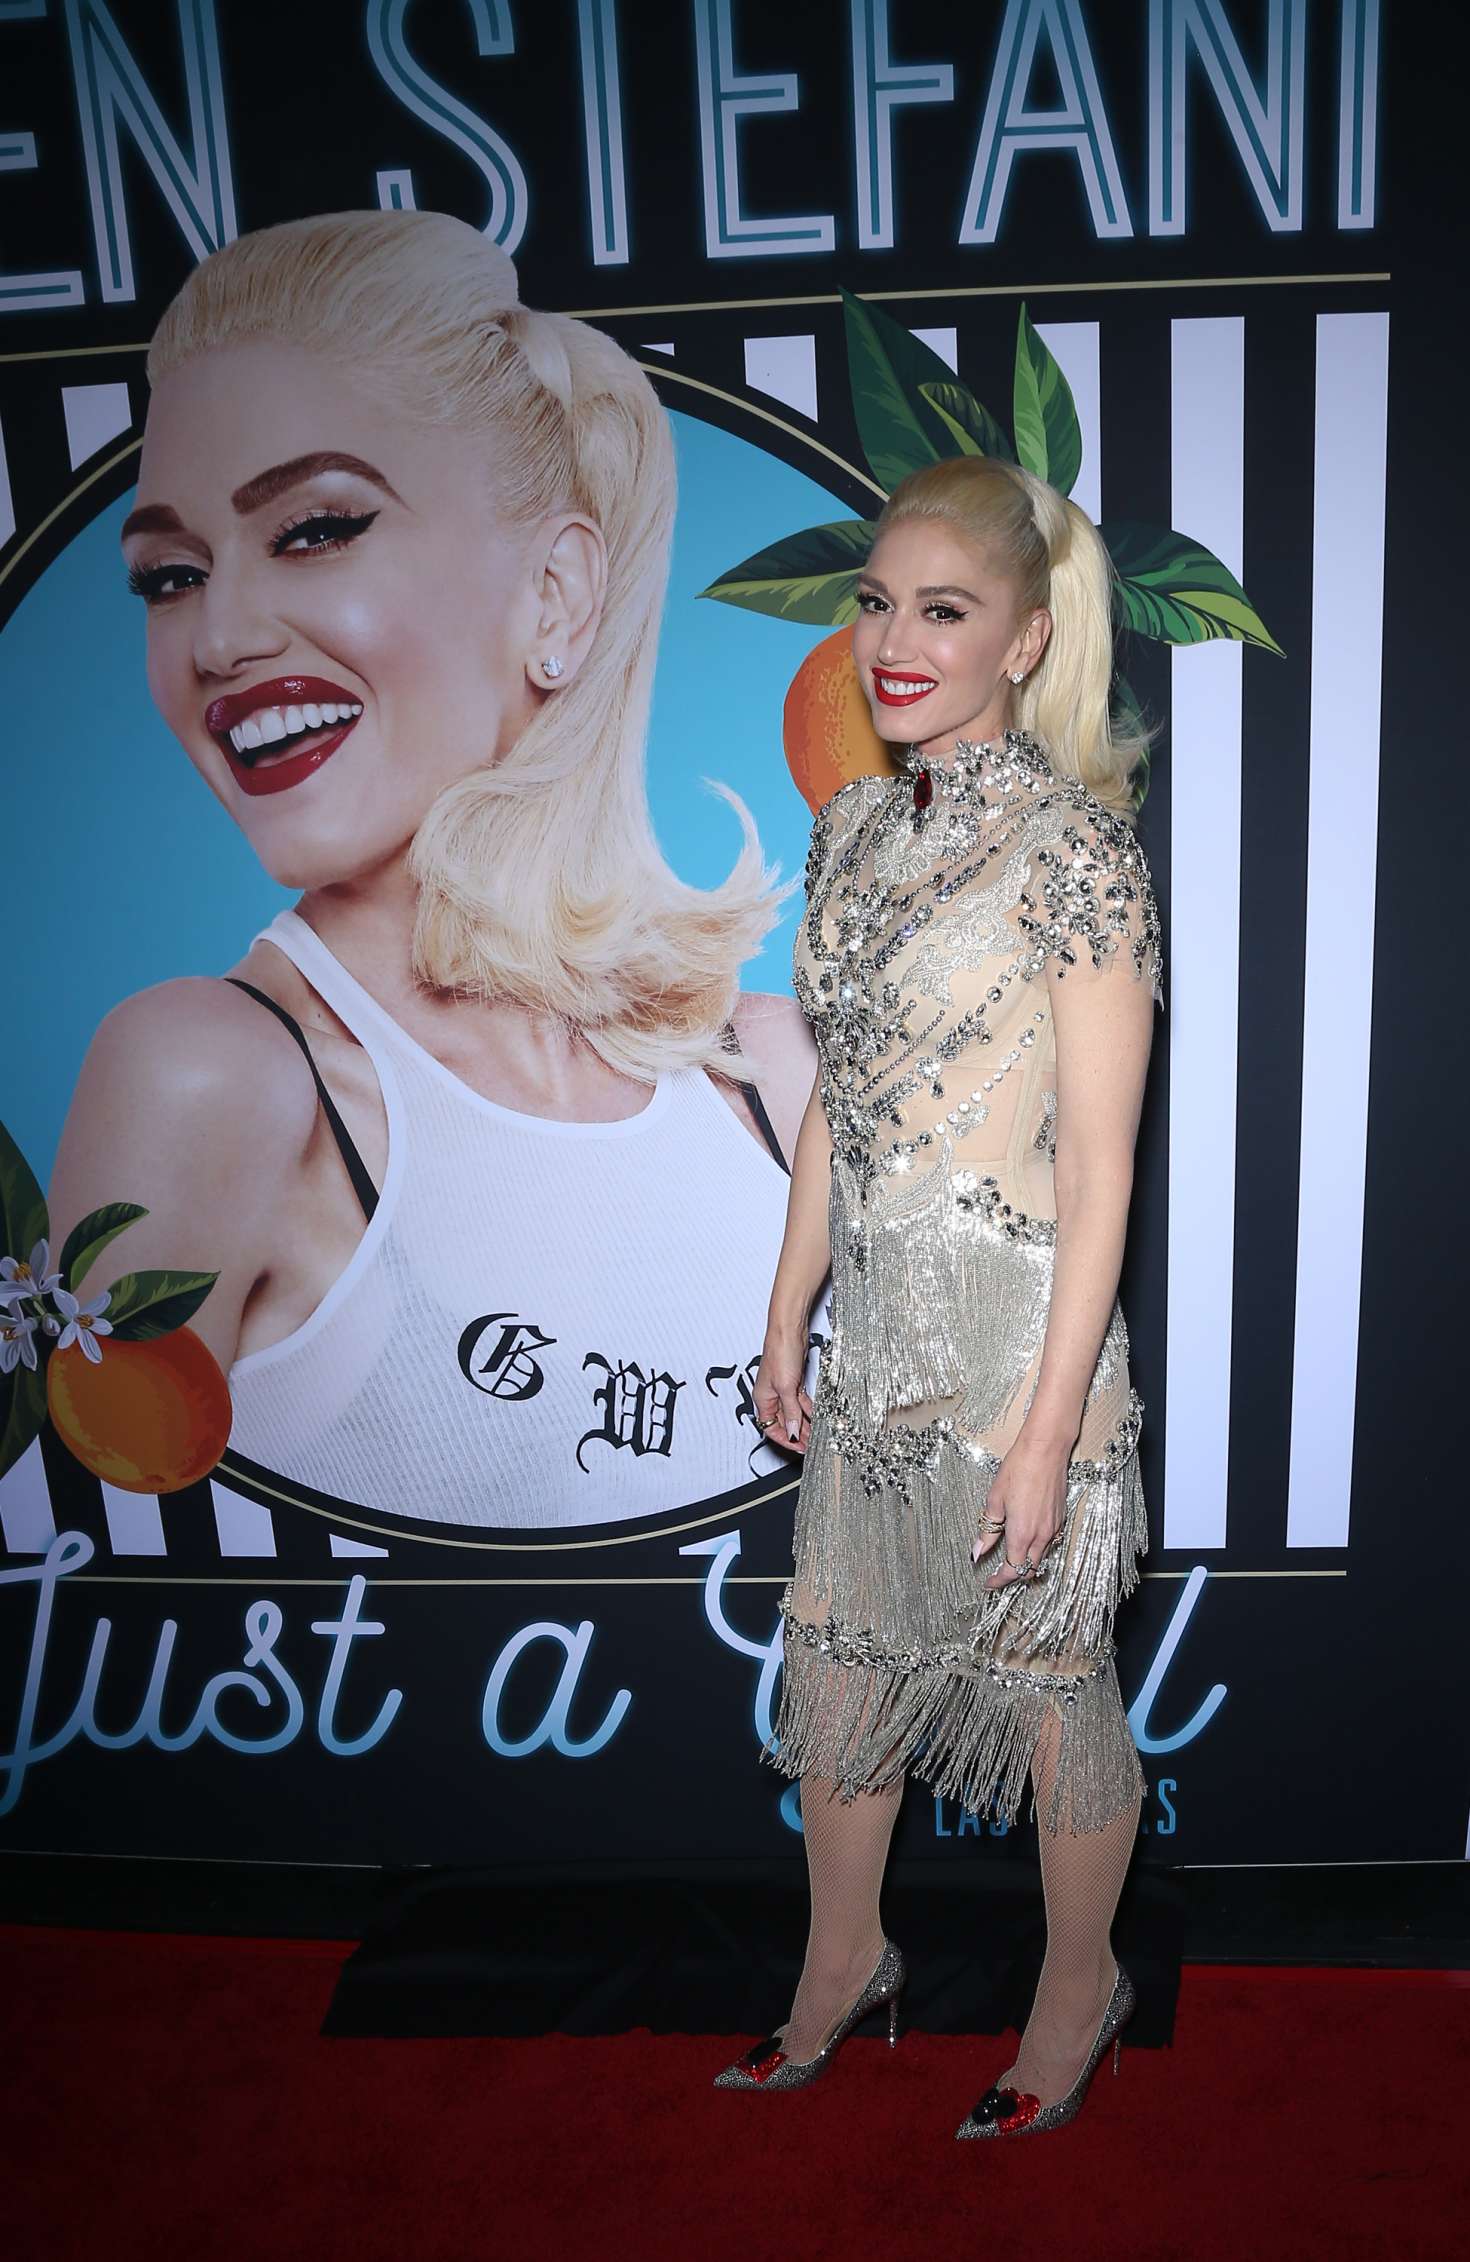 Gwen Stefani â€“ â€˜Gwen Stefani: Just A Girlâ€™ Red Carpet in Las Vegas